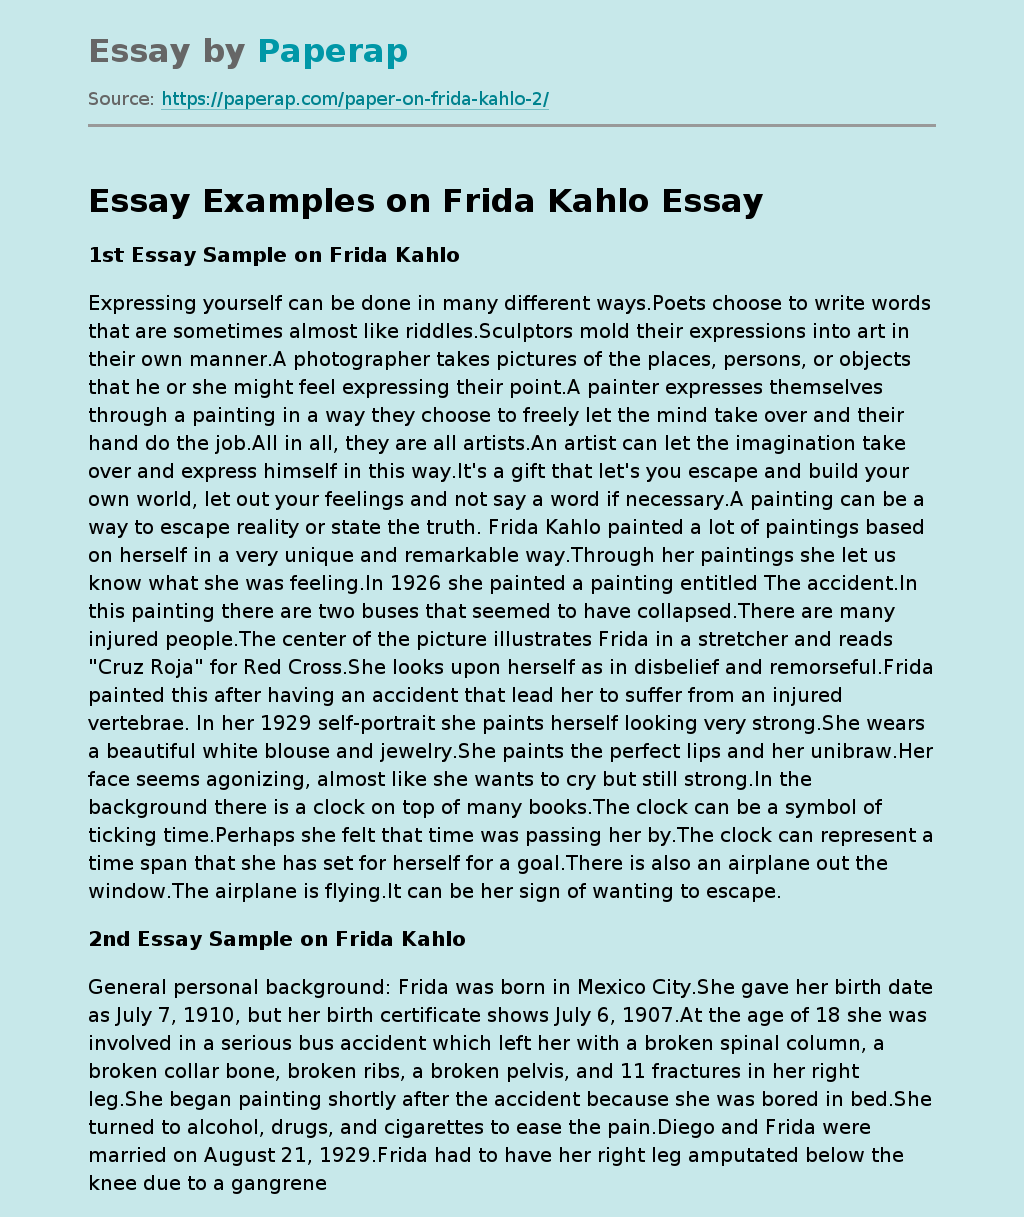 Essay Examples on Frida Kahlo